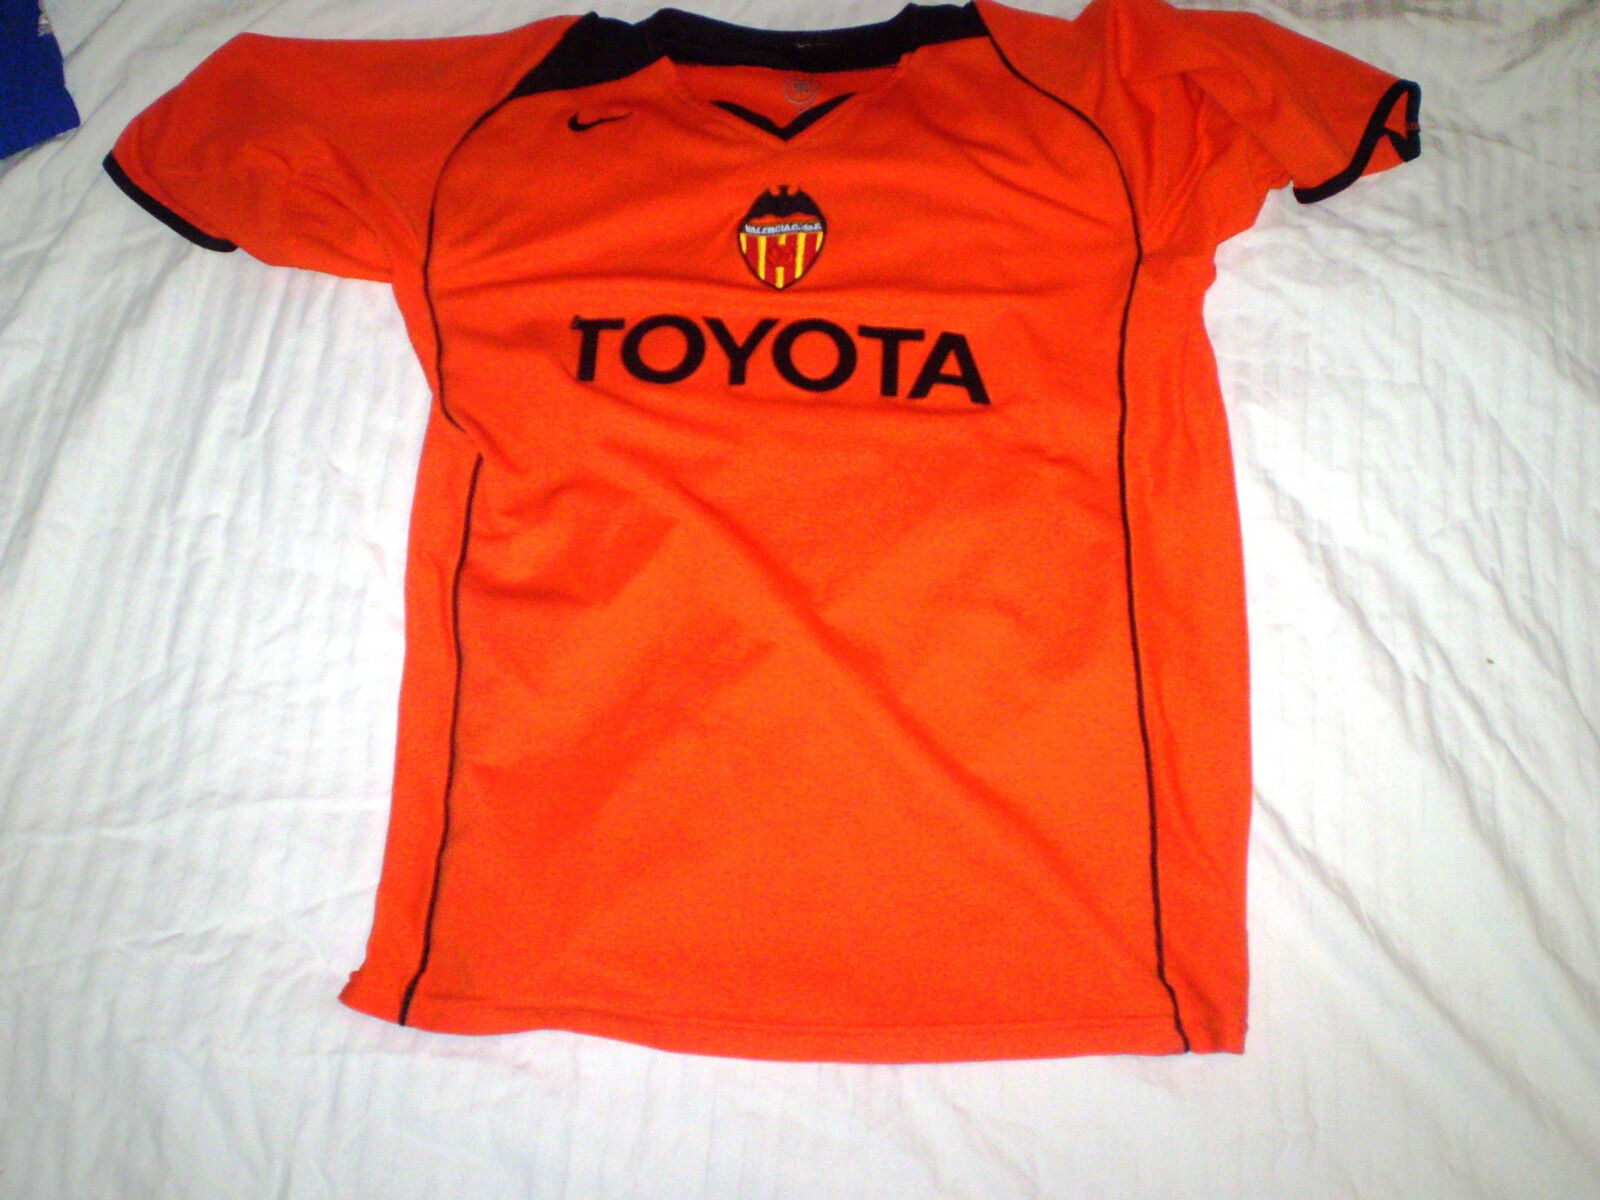 Suelto traicionar Reunión Nike Valencia Club de Fútbol TOYOTA La Liga #5 Réplica Camiseta De Fútbol  Naranja XL | eBay